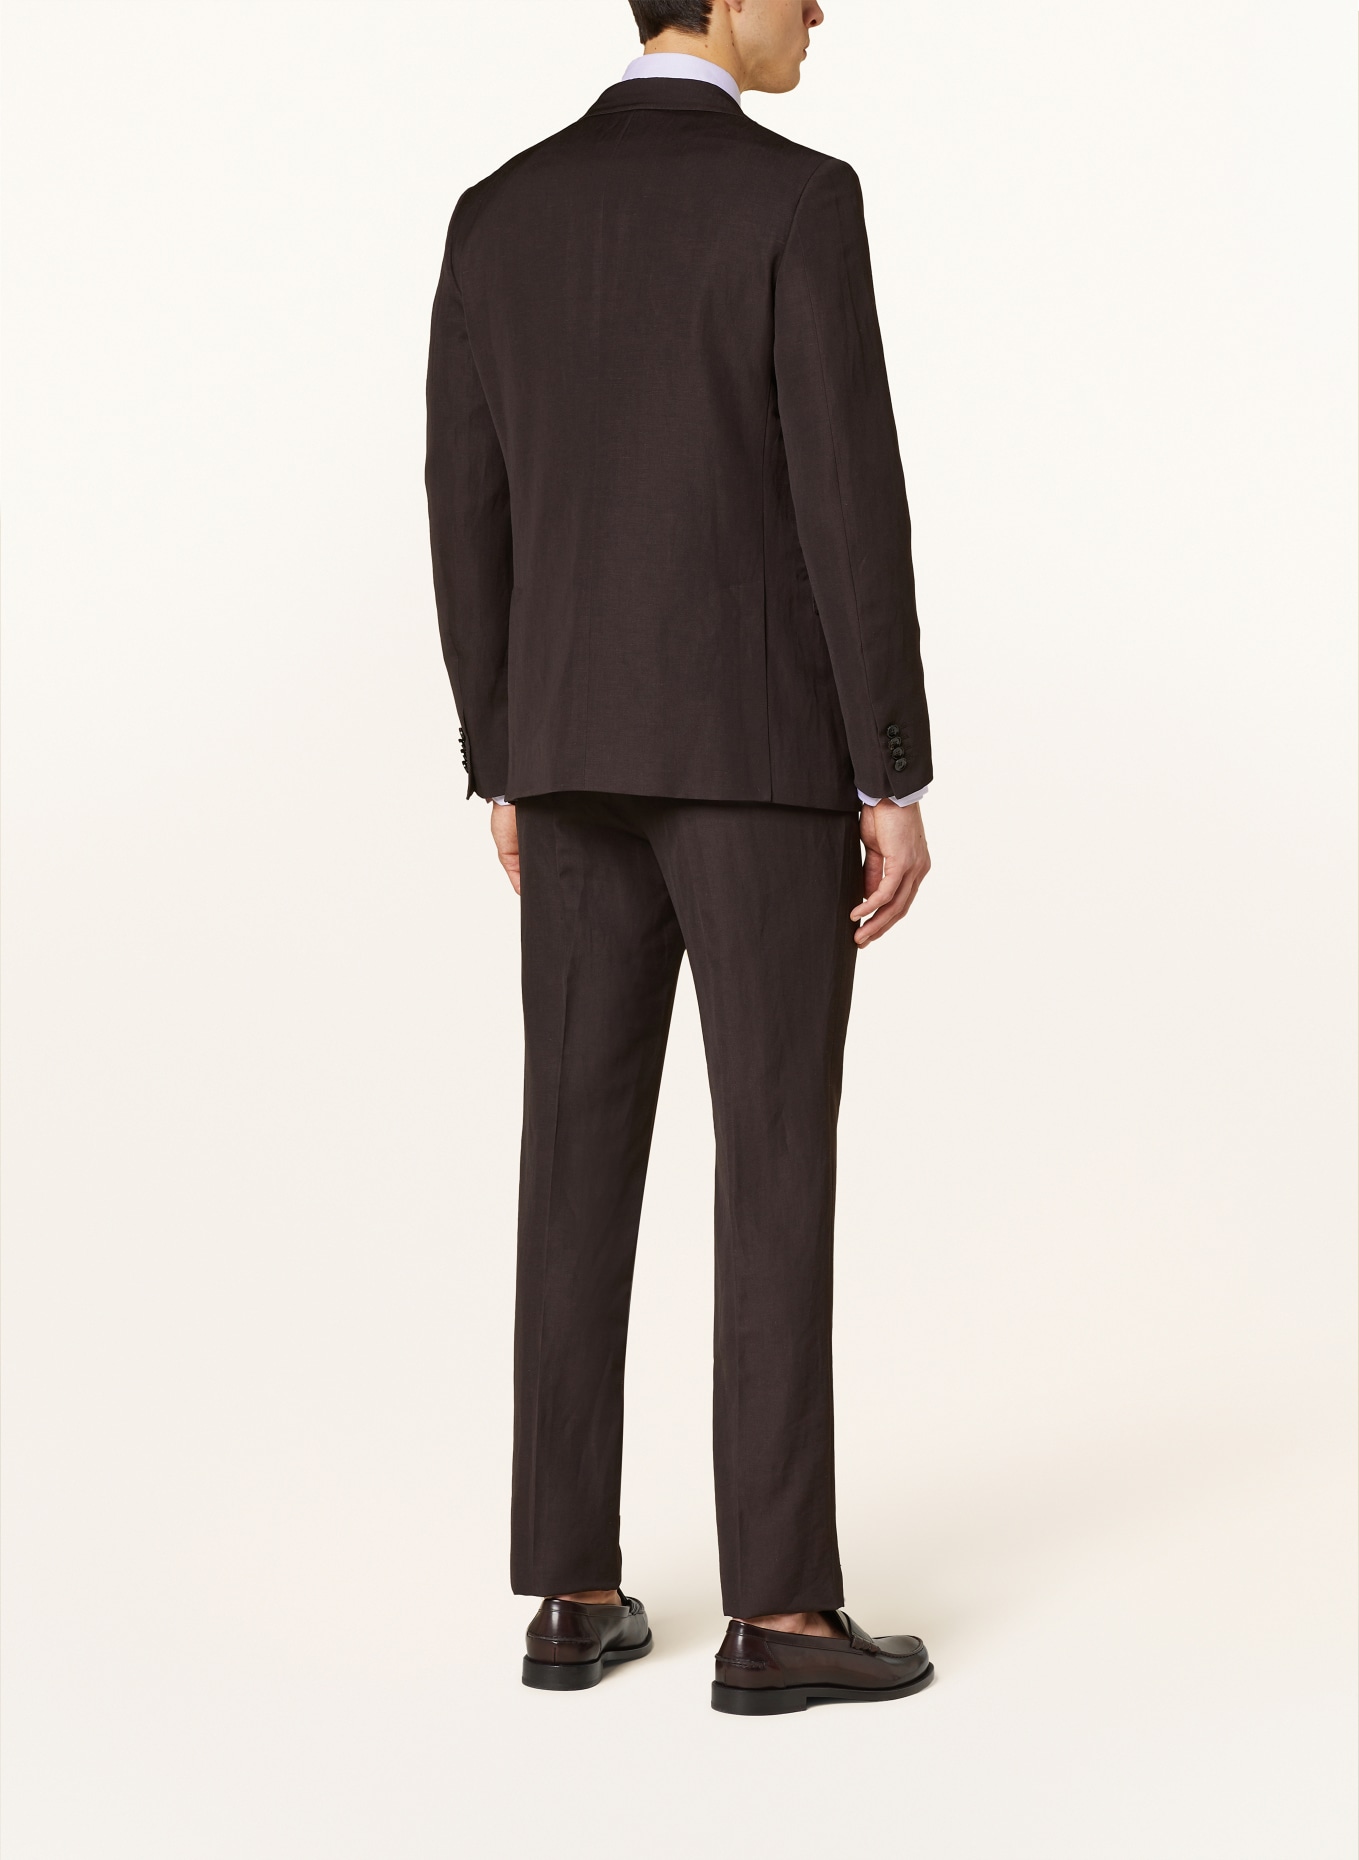 ZEGNA Suit jacket regular fit with linen, Color: 2A7 Brown (Image 3)